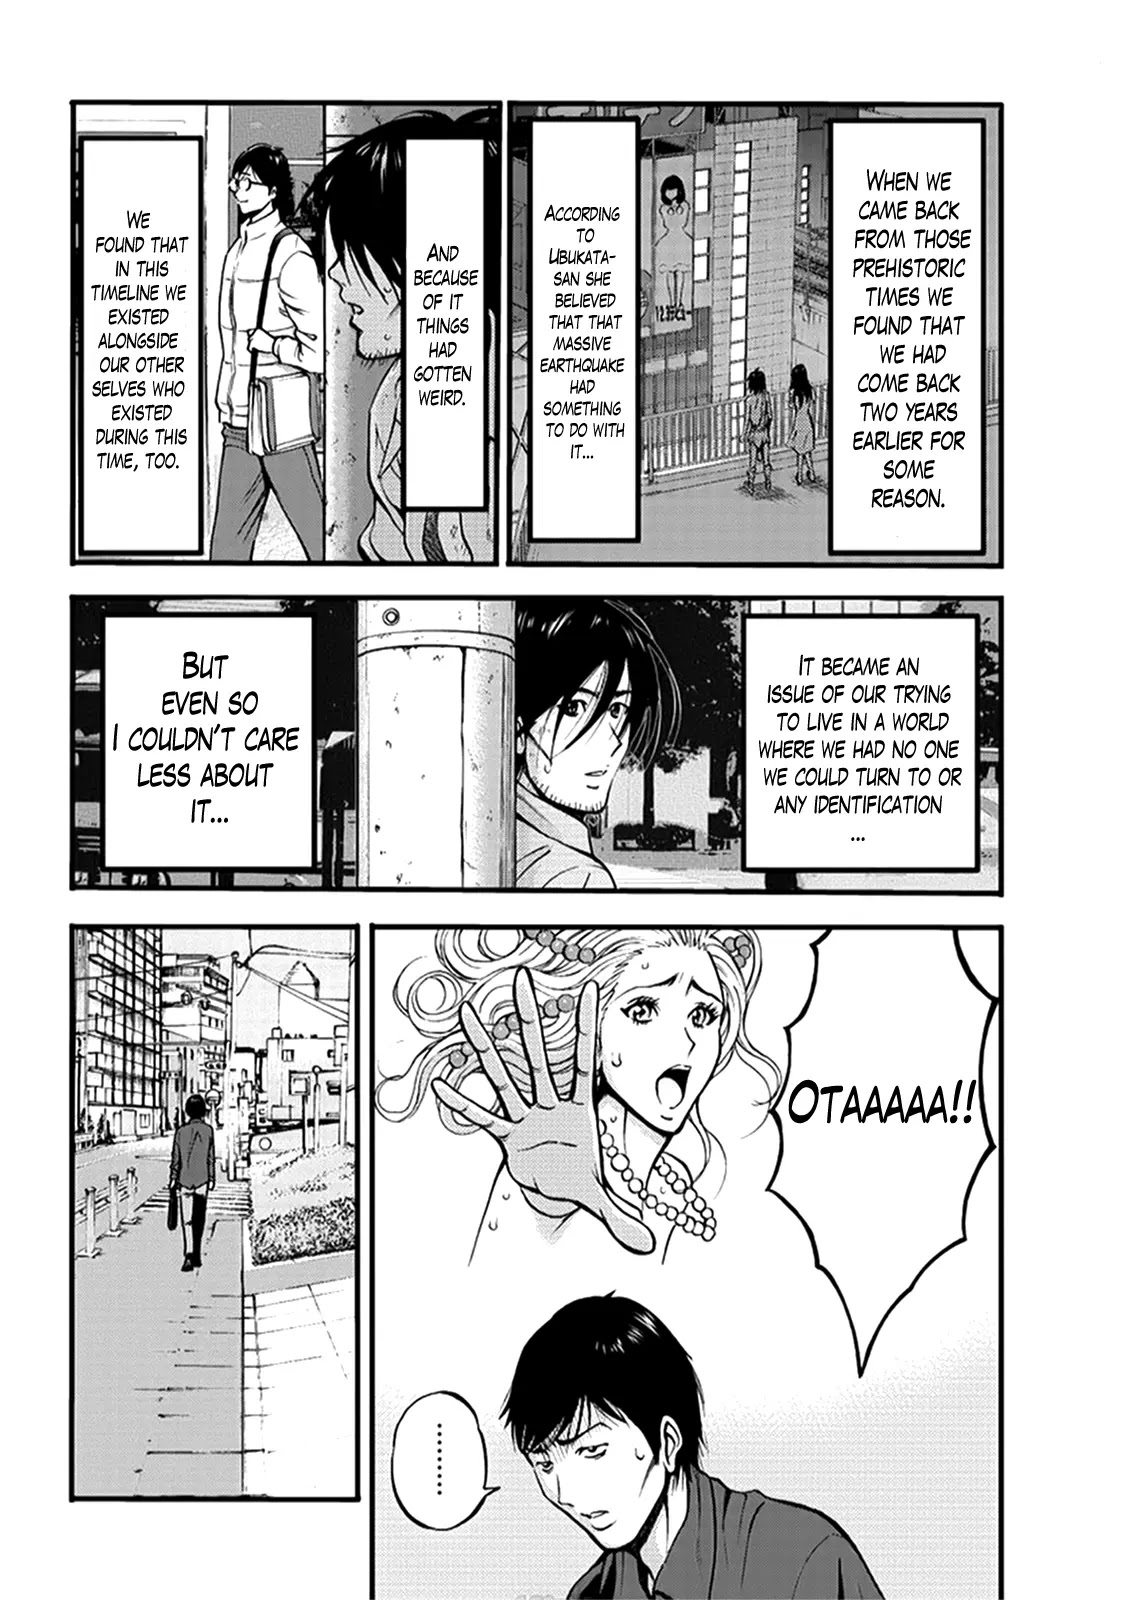 The Otaku In 10 000 B C Chapter 27 Read Manga Online Free